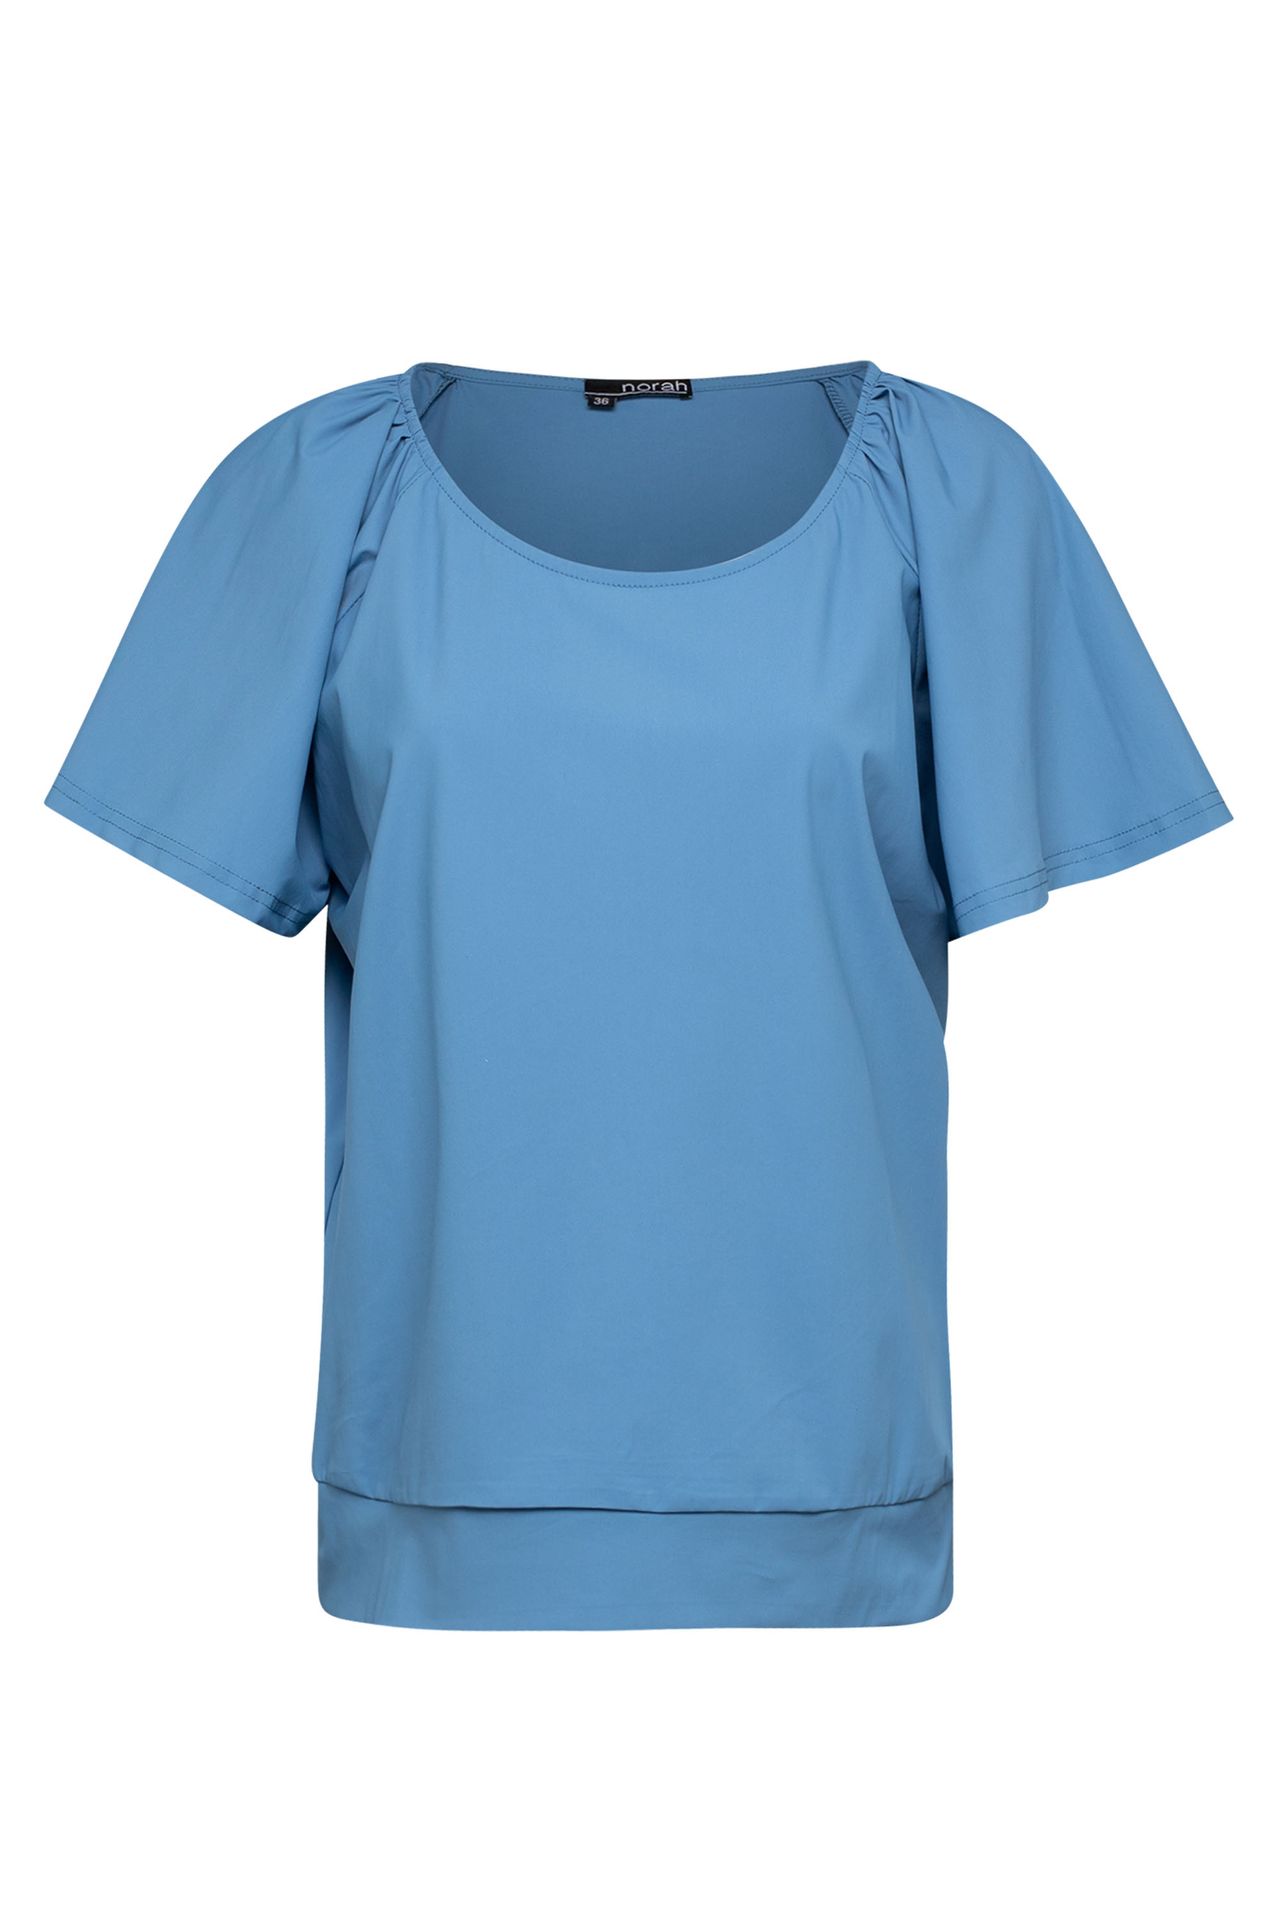 Norah Shirt blauw travelstof denim blue 212566-472